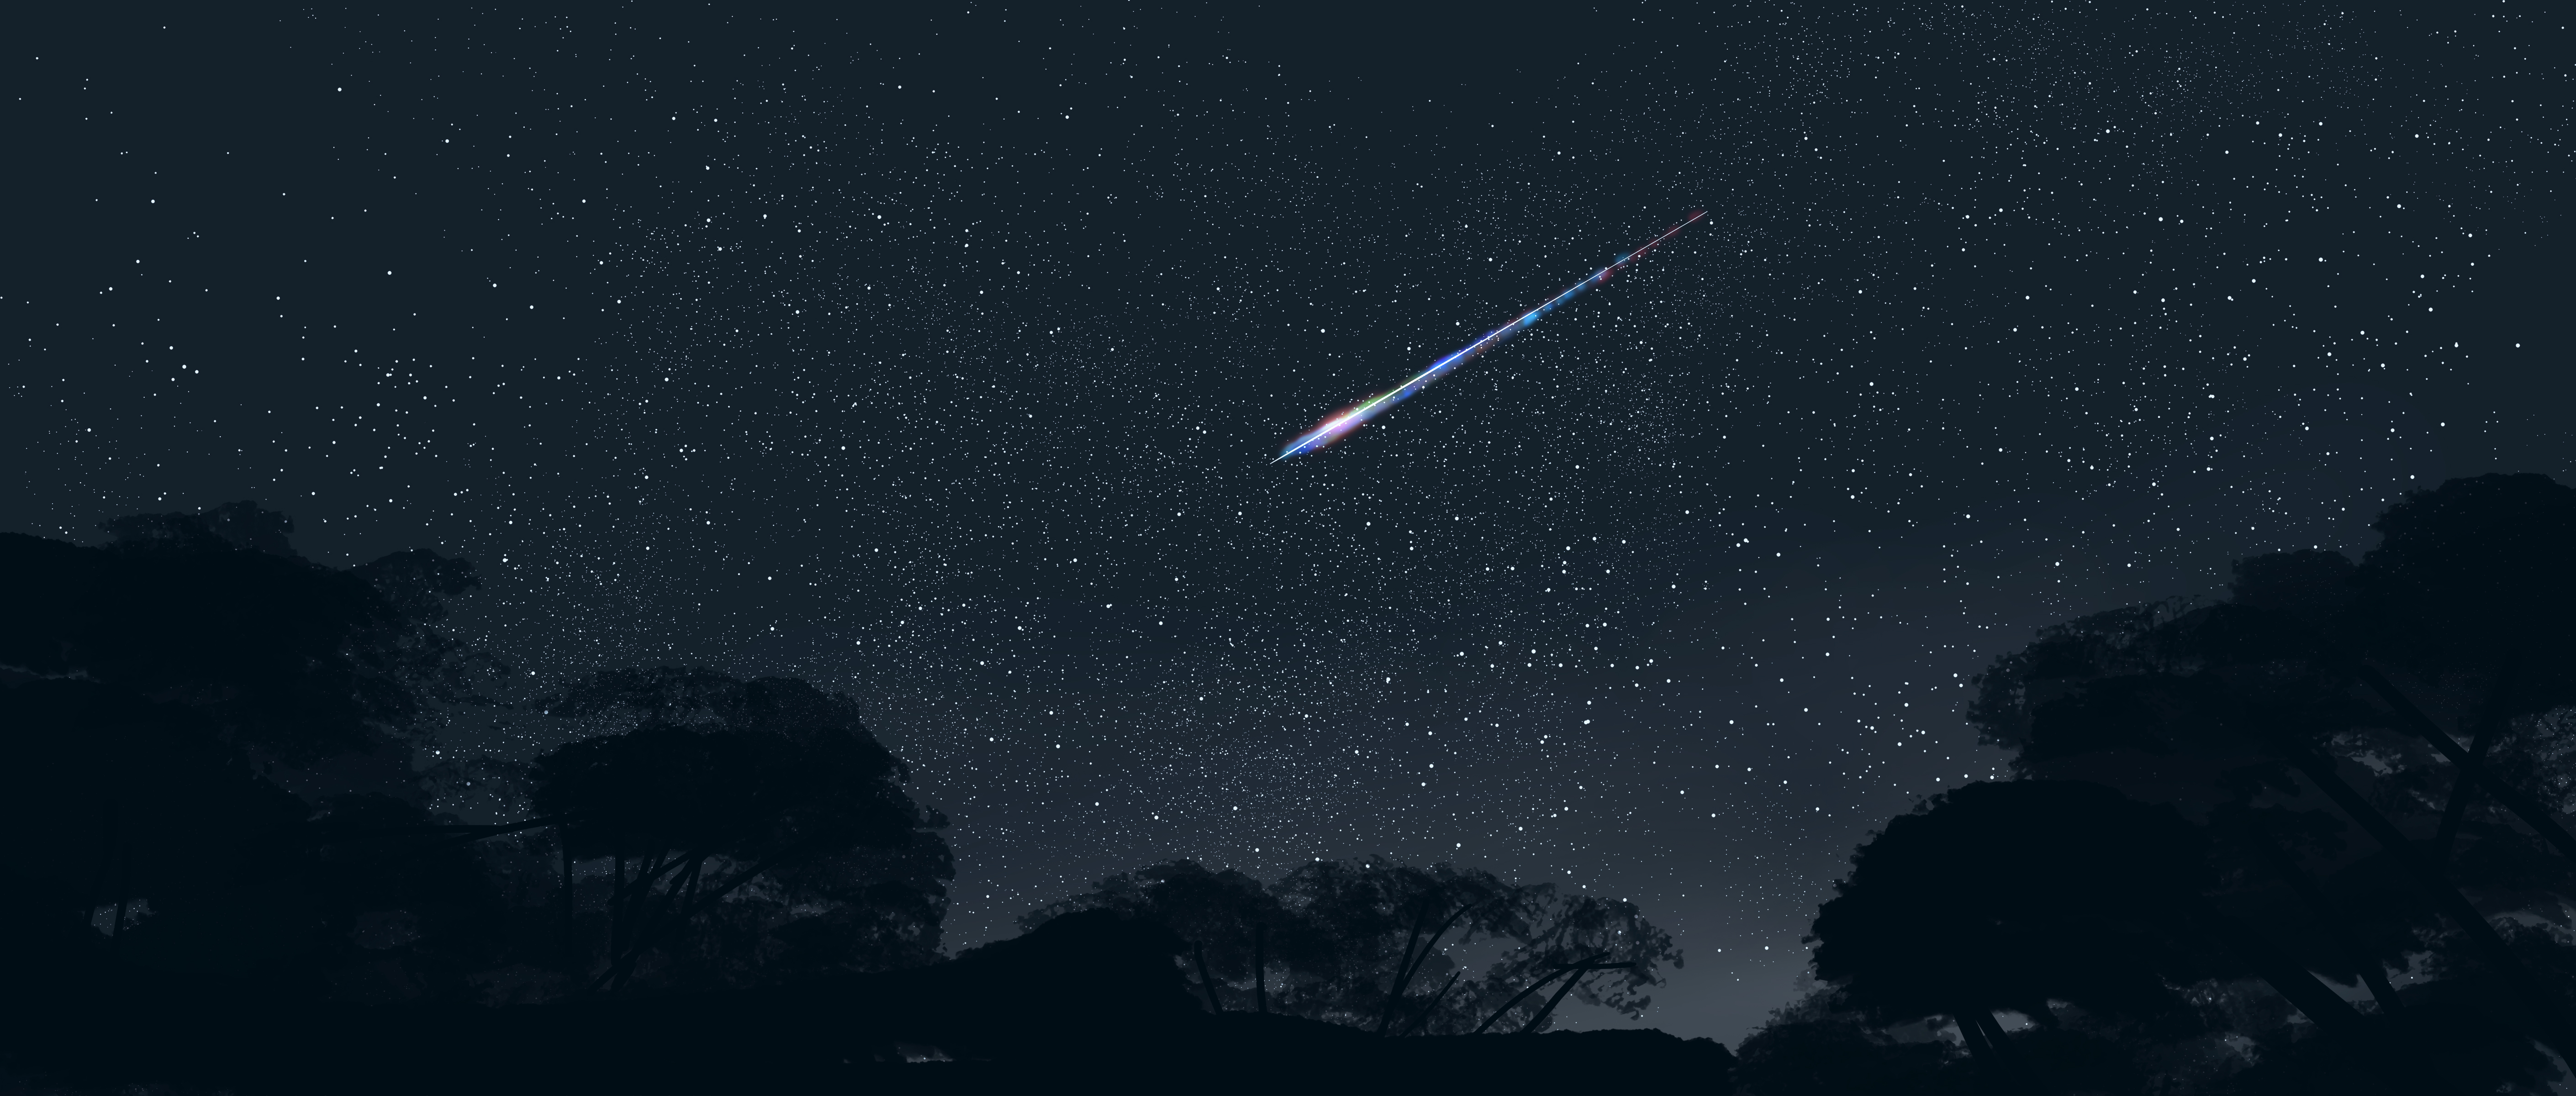 General 5640x2400 Gracile digital art artwork illustration ultrawide wide screen sky forest stars starred sky shooting stars nature night trees night sky